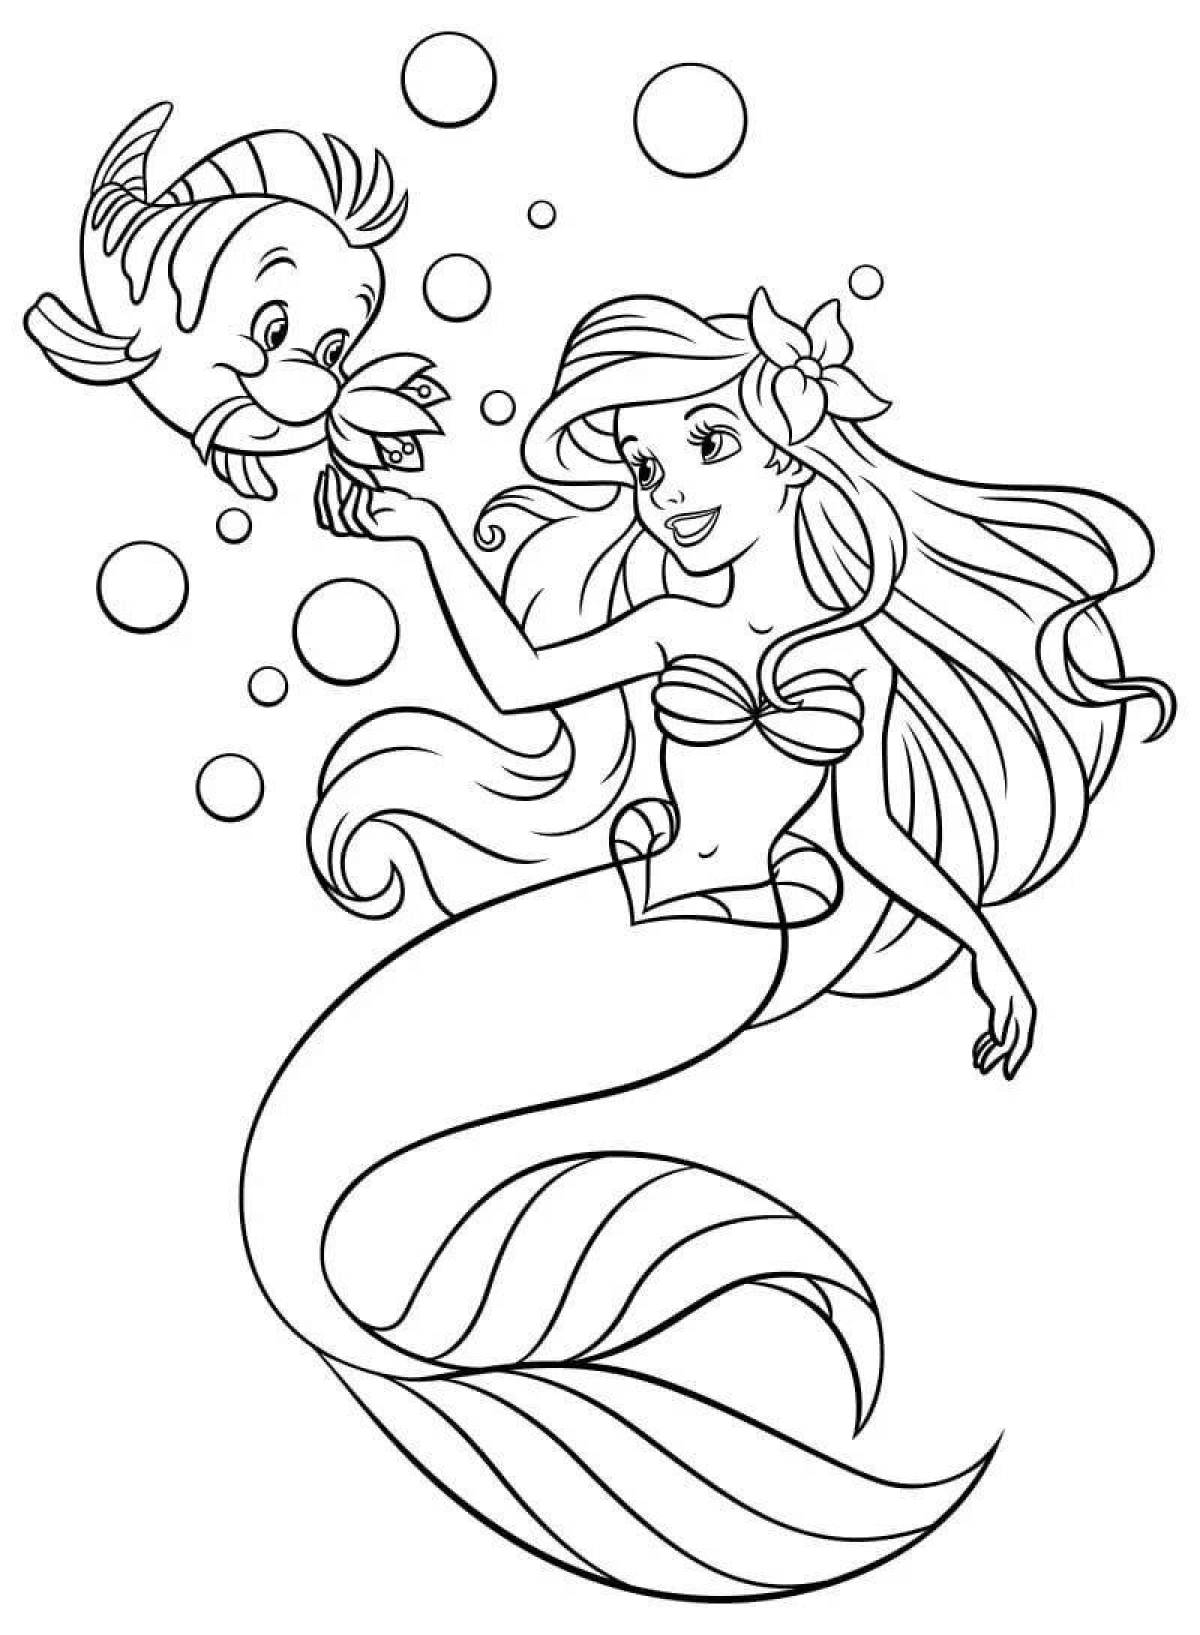 Princess ariel's dazzling mermaid coloring book